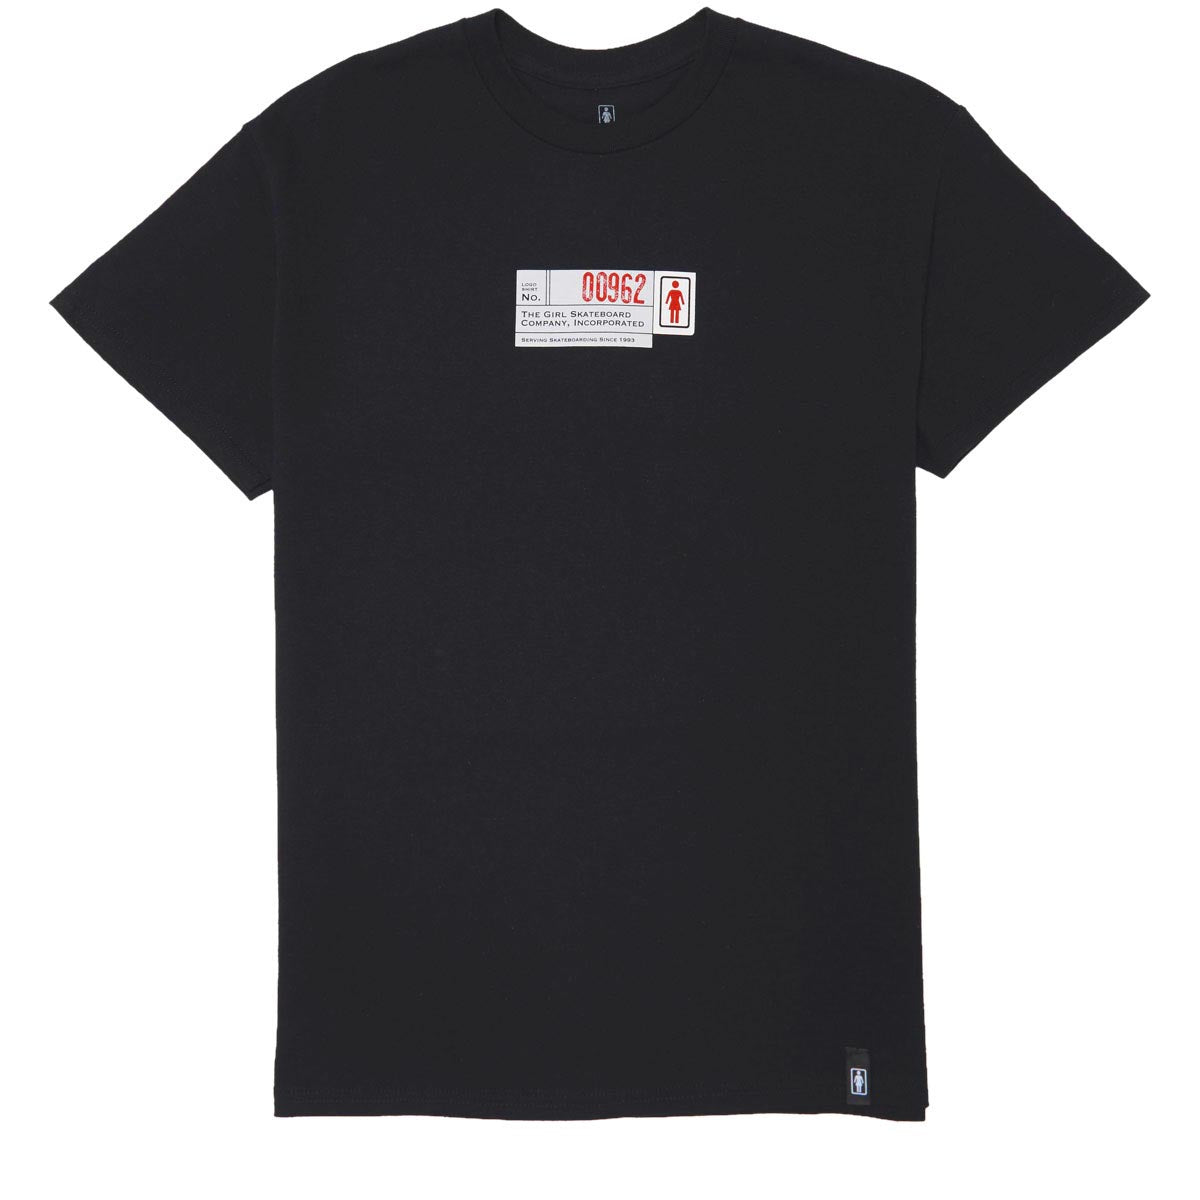 Girl Grid T-Shirt - Black image 1